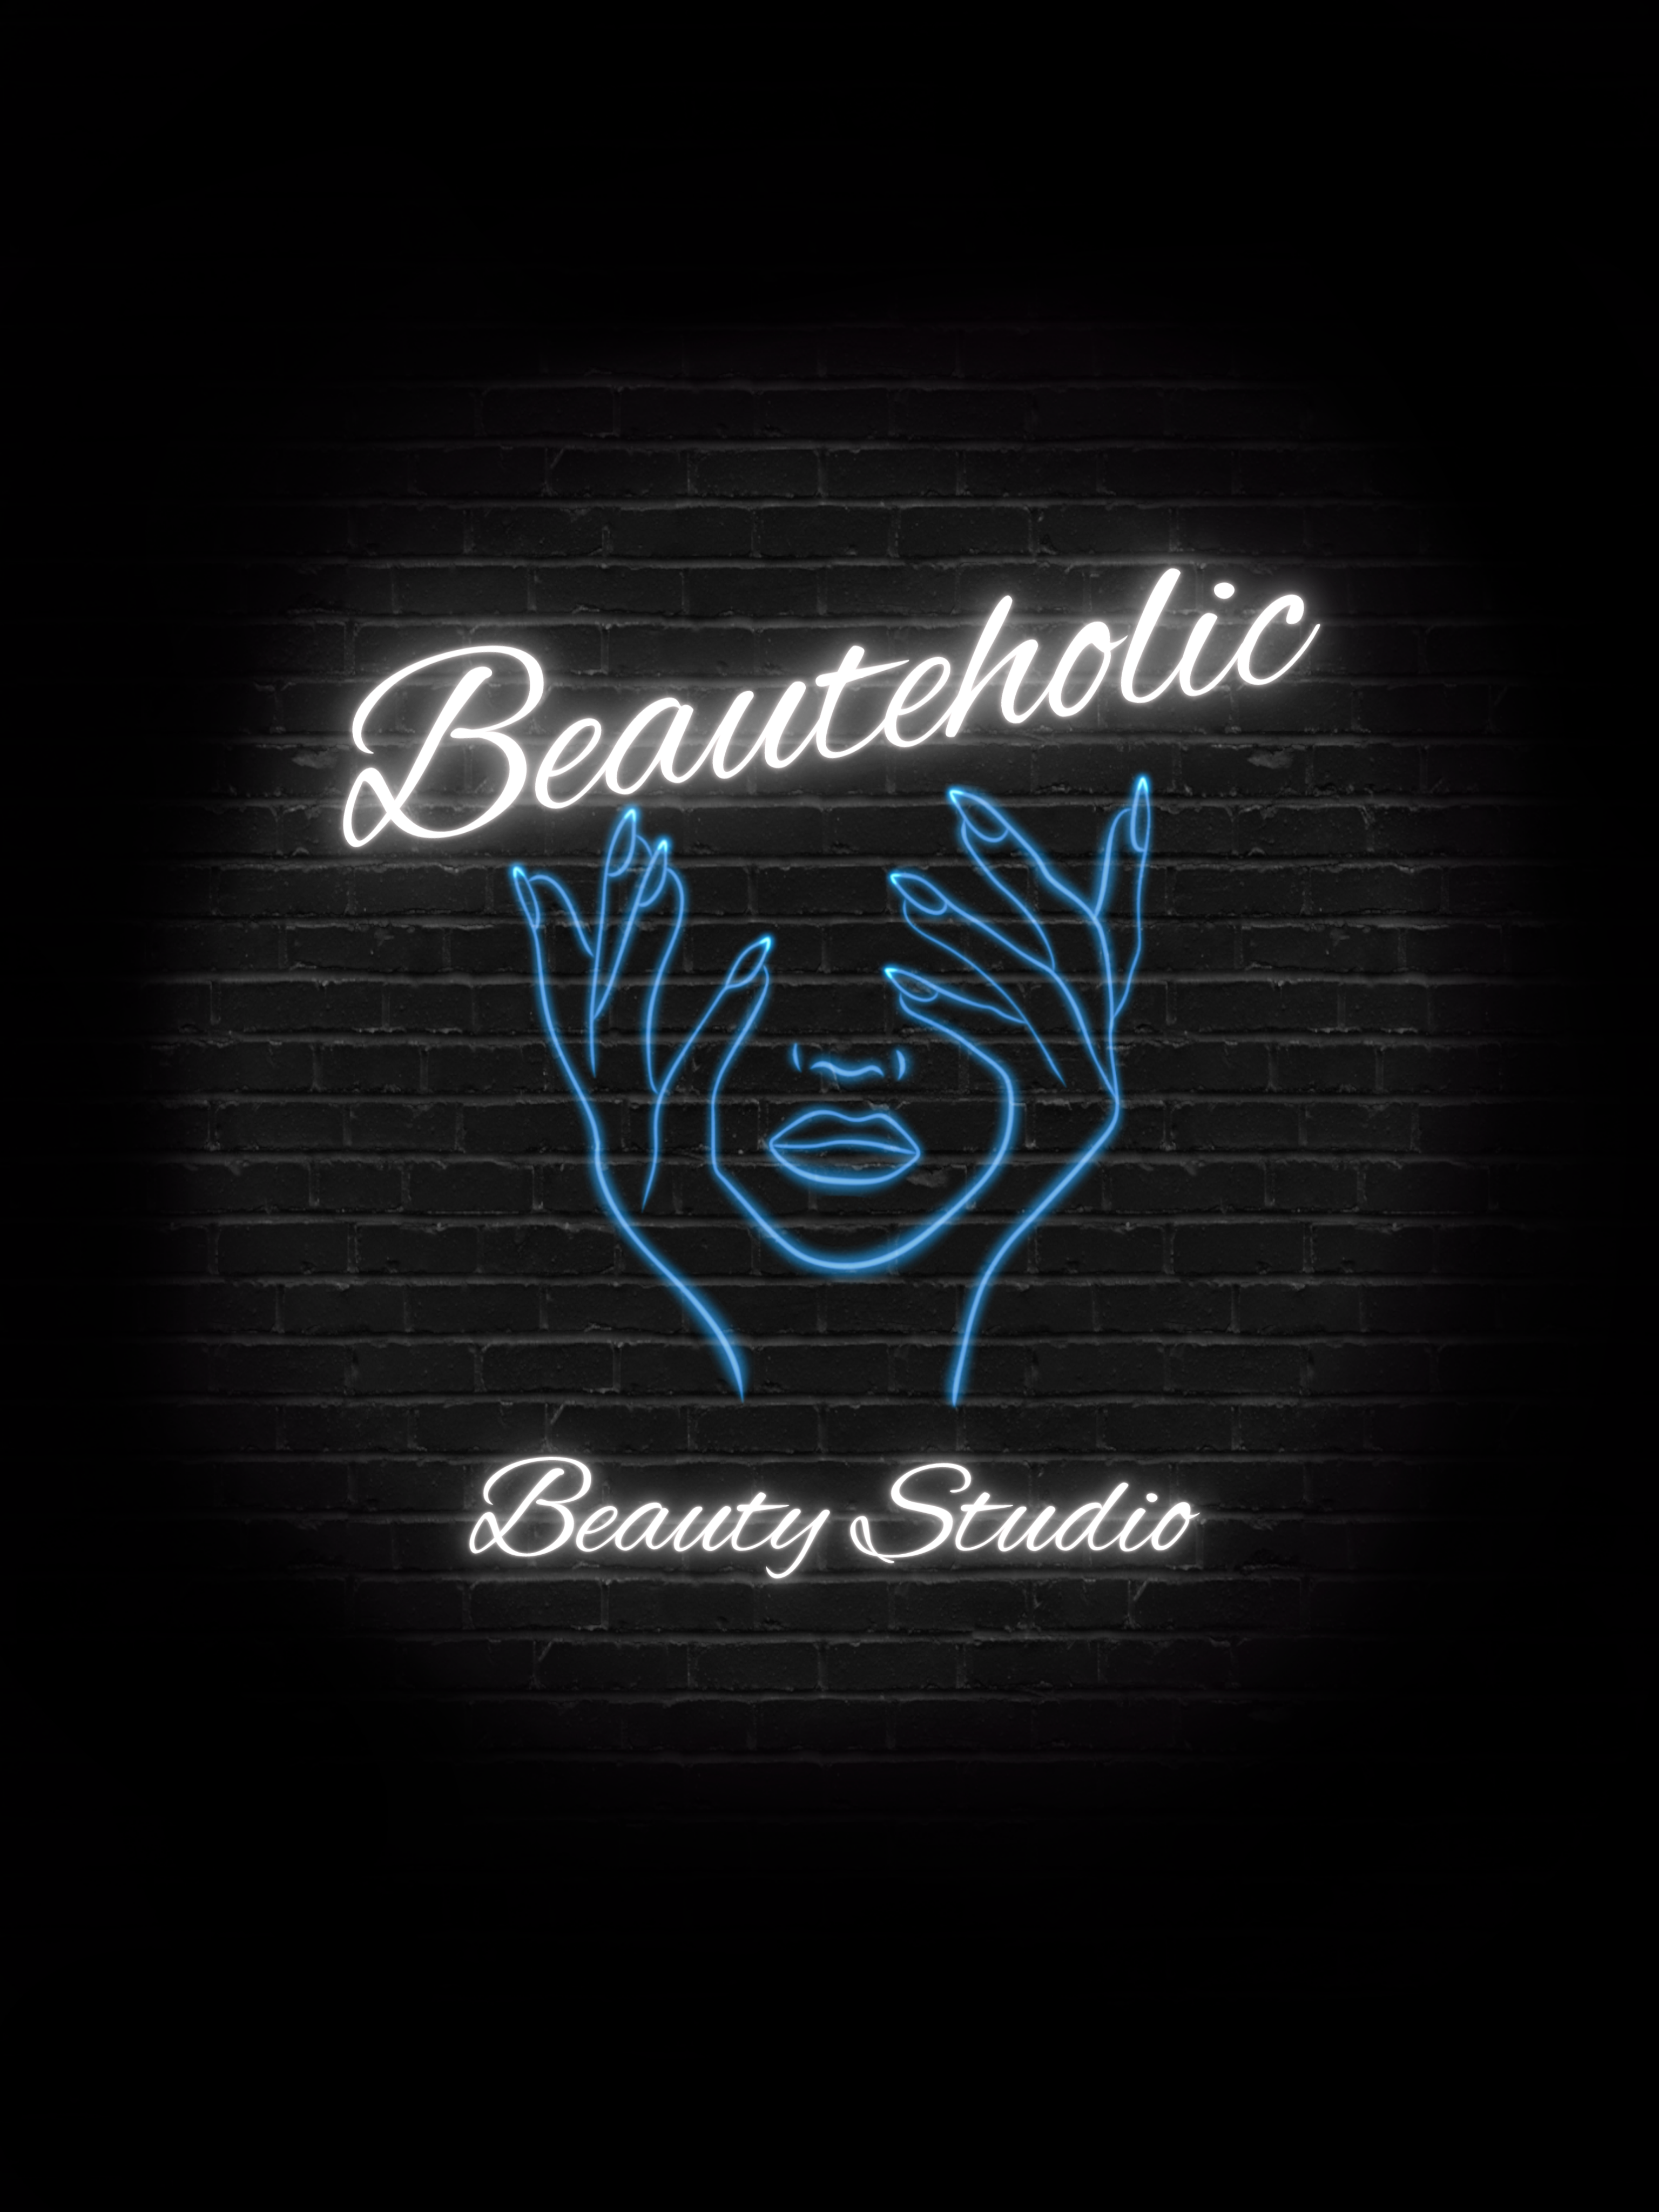 Beauteholic Beauty Studio